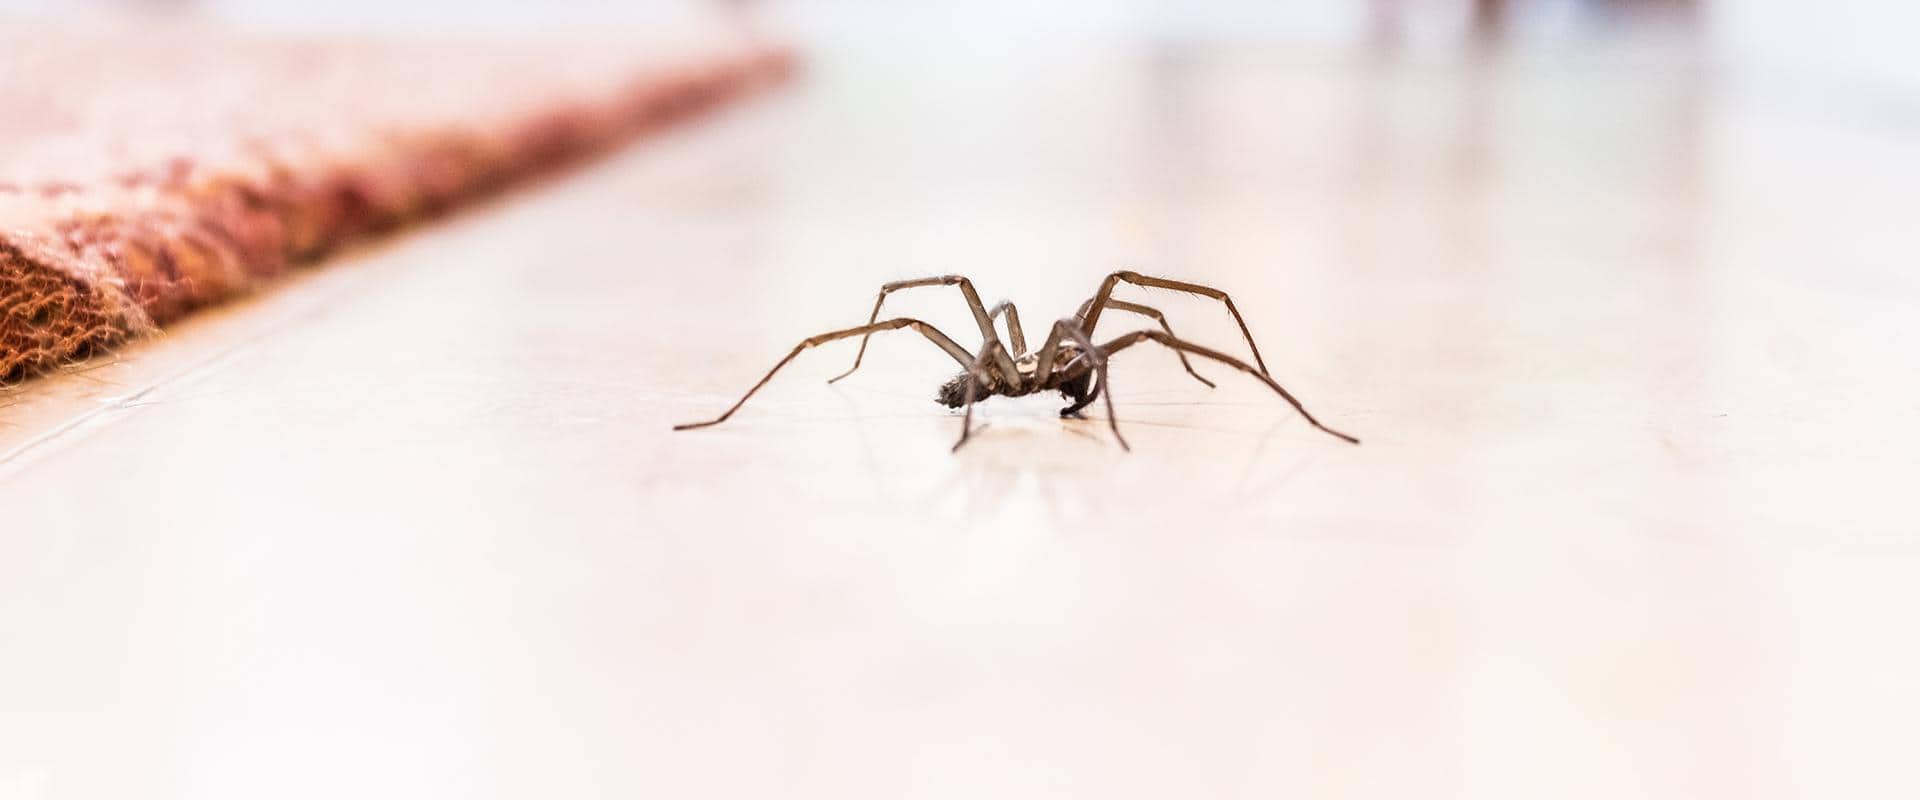 spider in a washington home